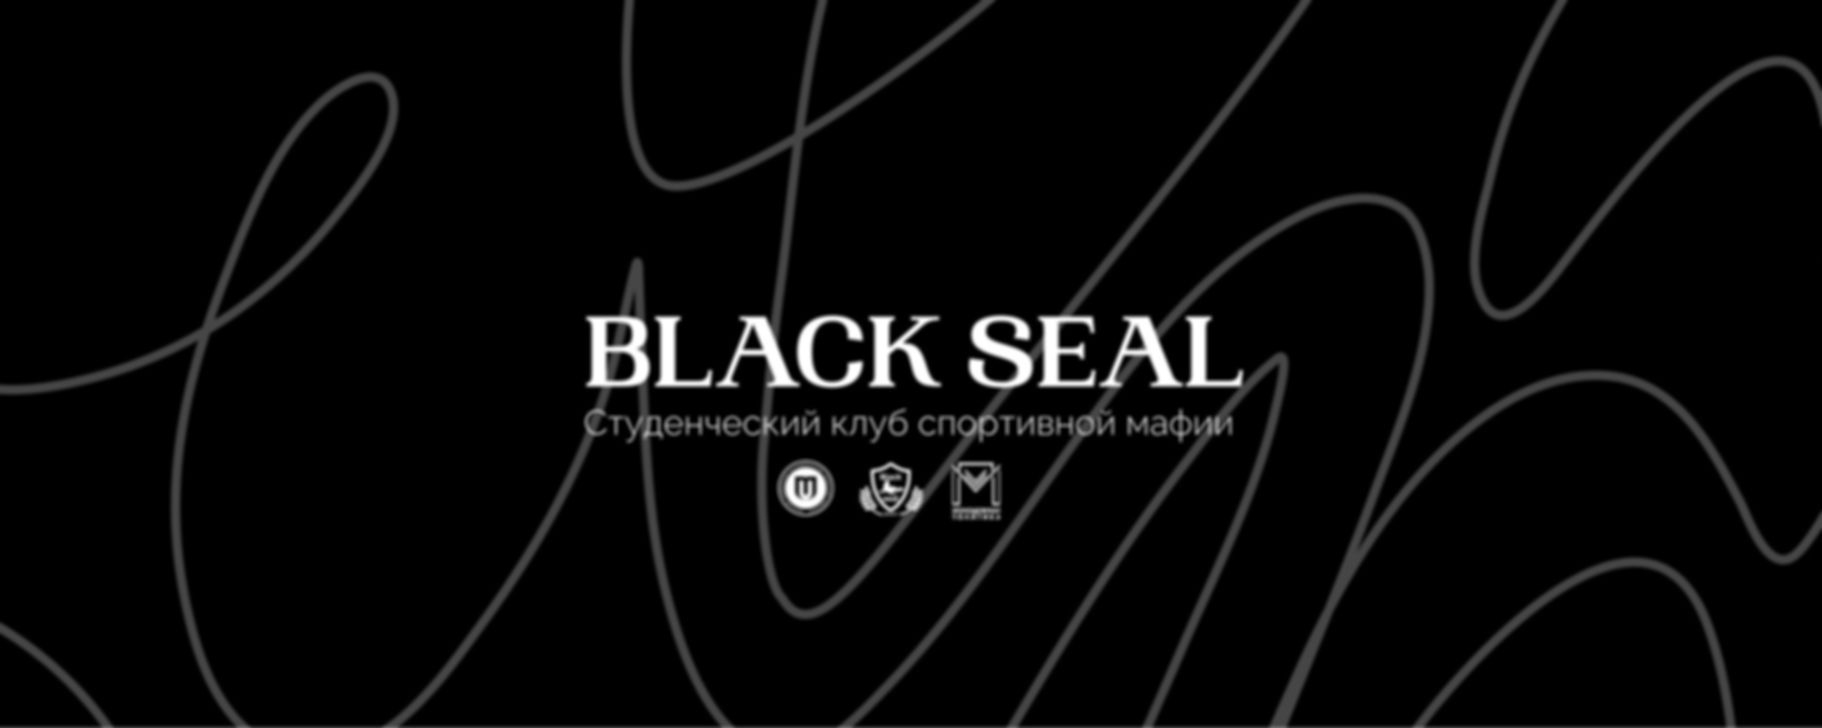 Black seal (Мафия ИРНИТУ) - фото